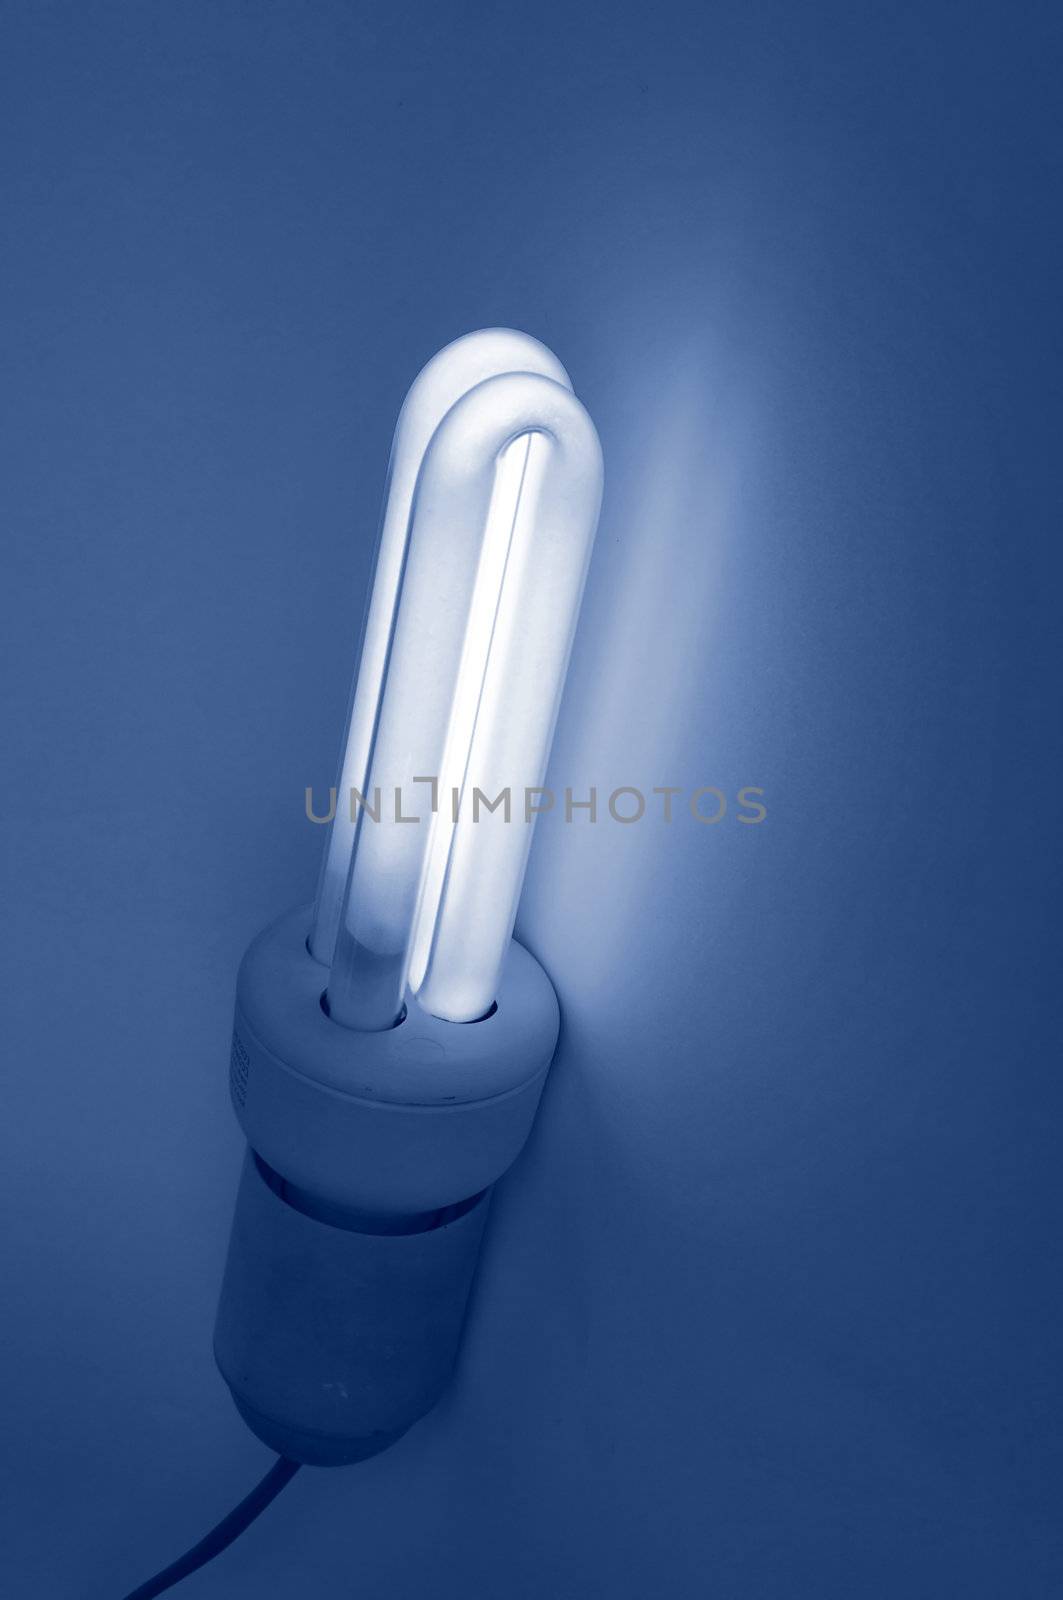 Light bulb by claudiodivizia